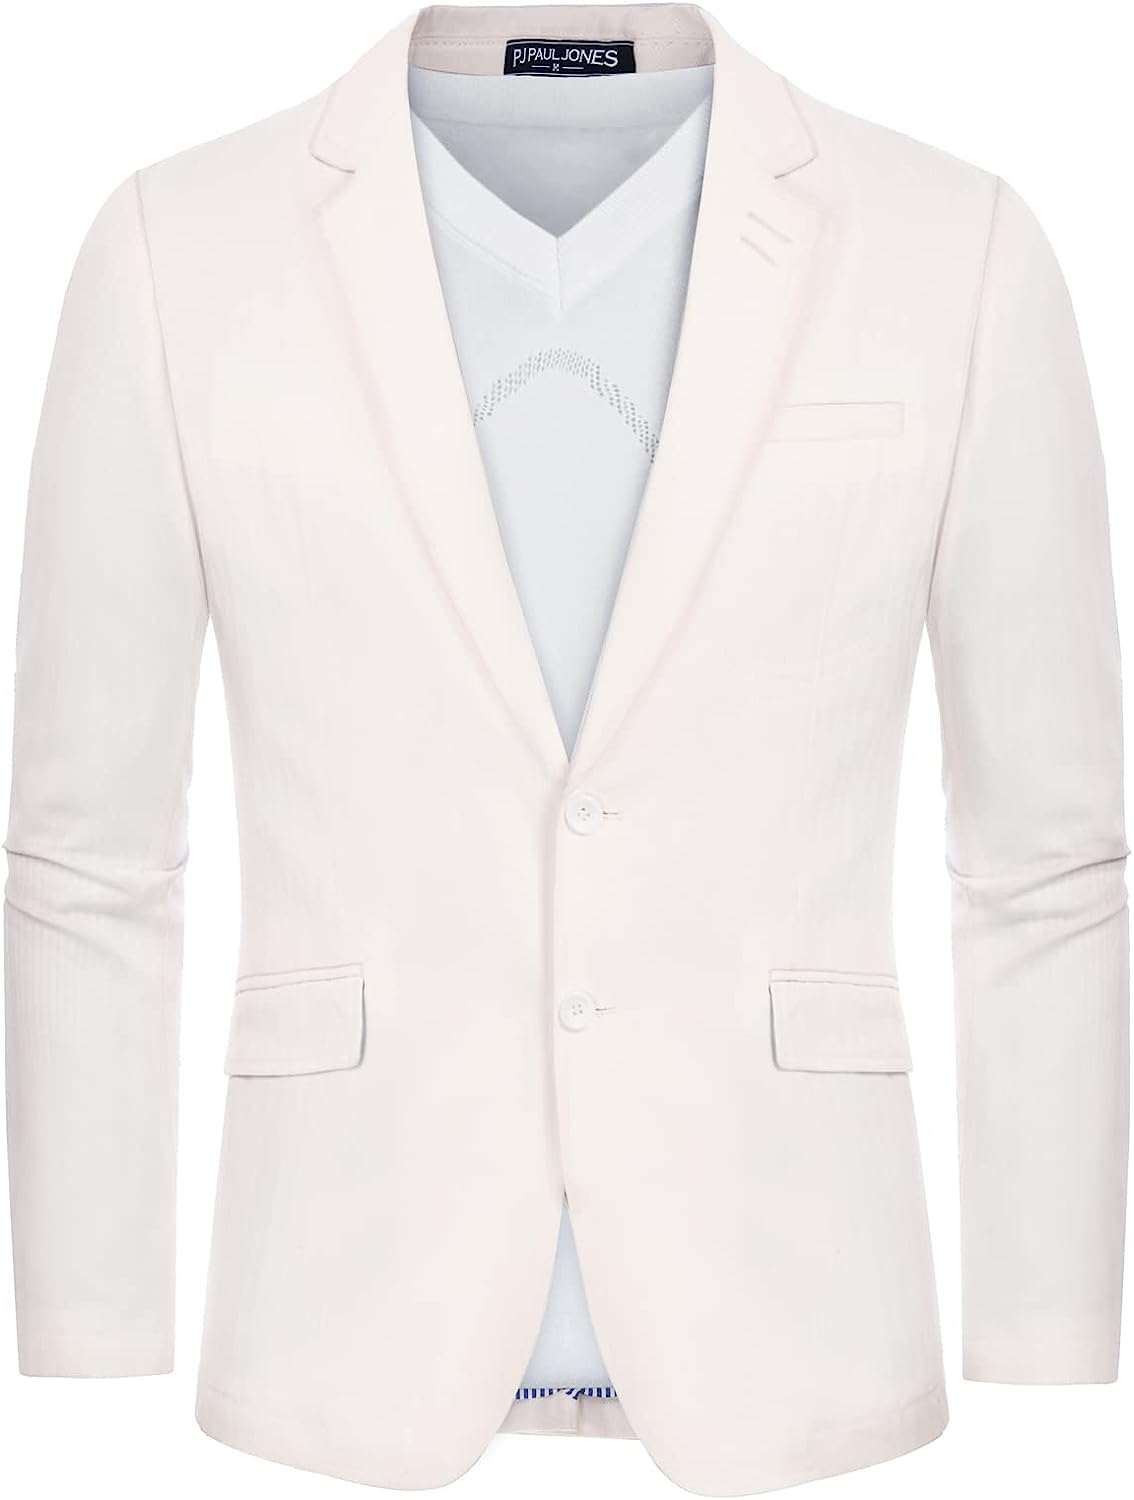 PJ Paul Jones Men's Cotton Twill Blazer Jacket Lightweight Casual Slim Fit  Sport Coat